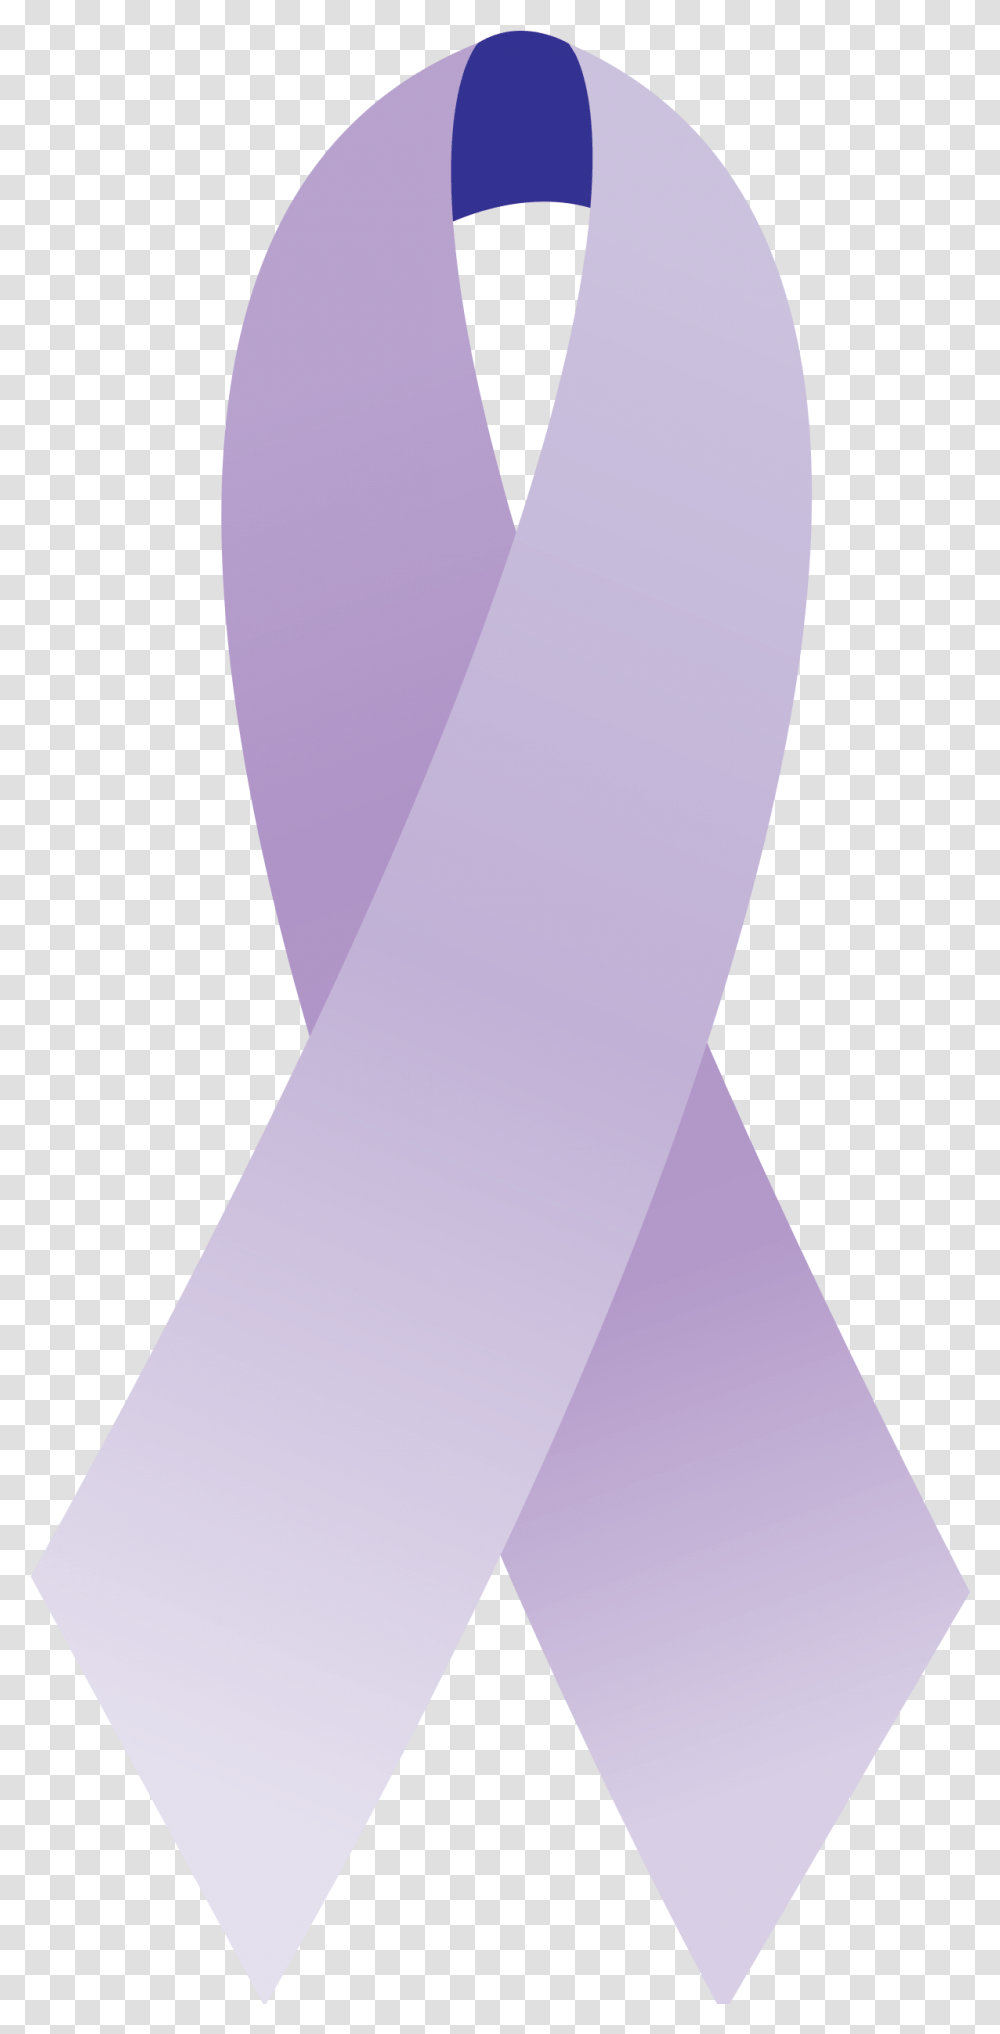 Filecancer Ribbon Generalsvg Wikipedia Cancer Ribbons Lavender, Tie, Accessories, Necktie, Paper Transparent Png